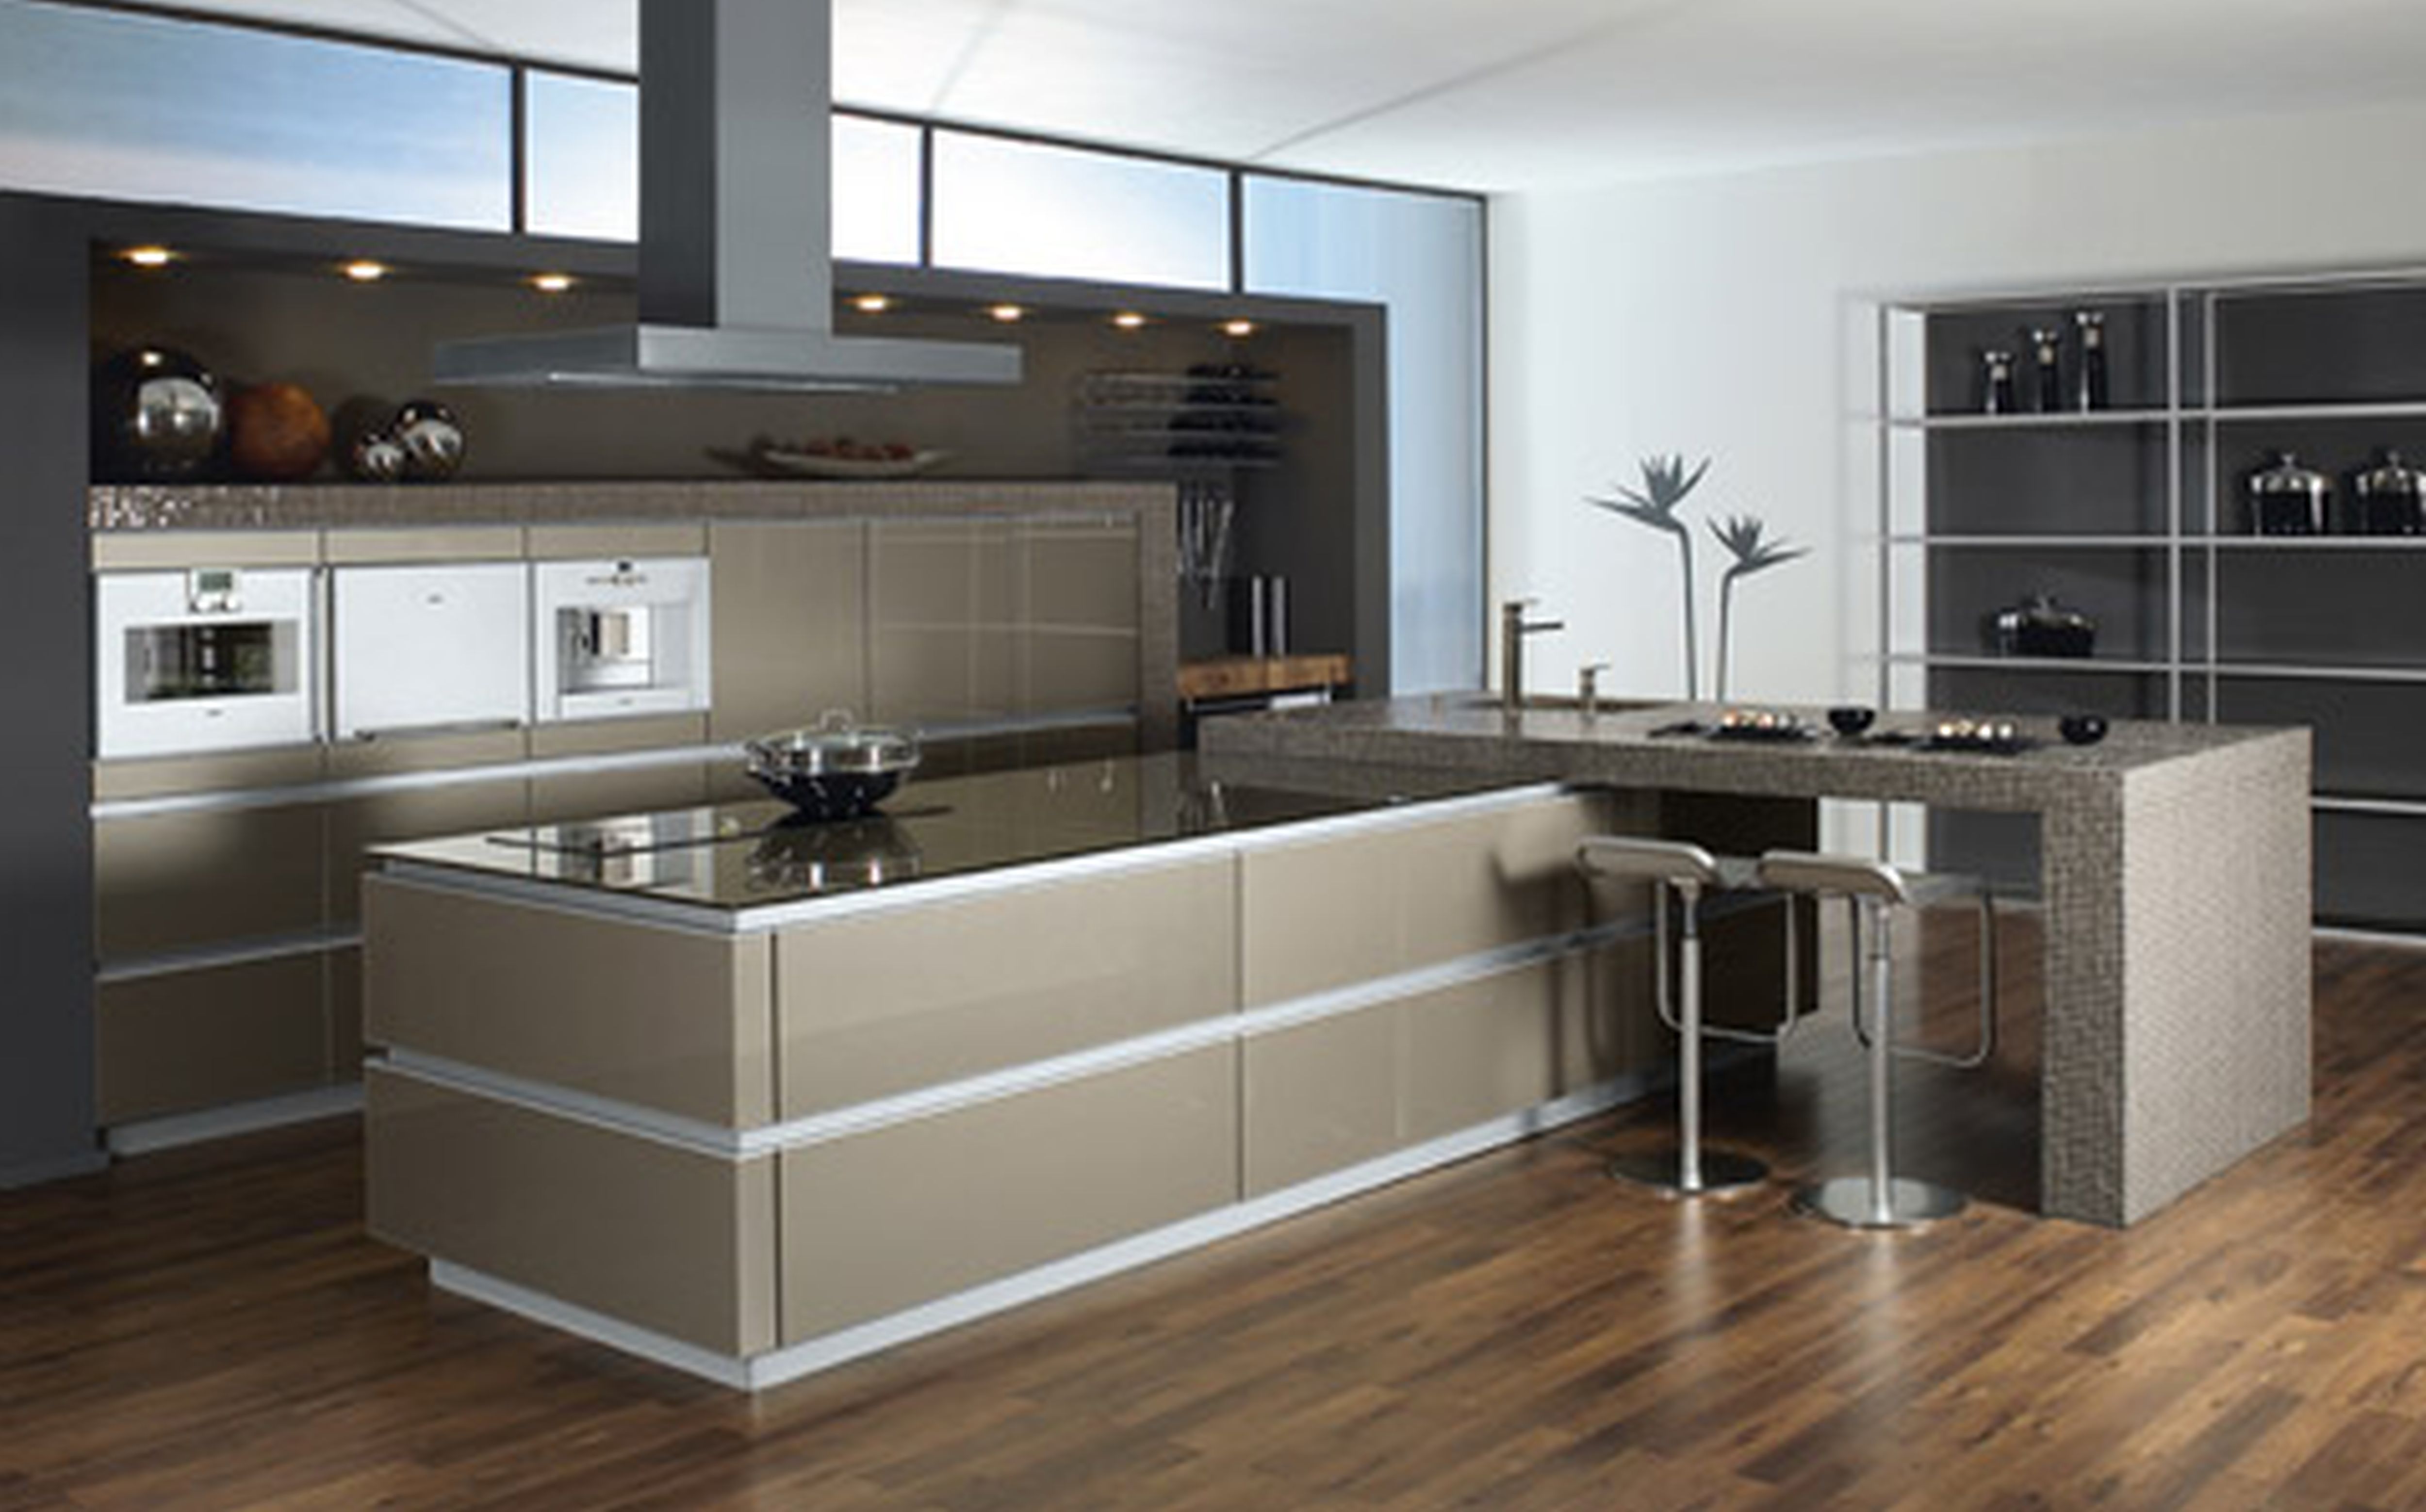 kitchen modern cabinets designs kitchens cabinet interior luxury aluminium contemporary furniture decor island layout islands house inspiring zapisano virtual info